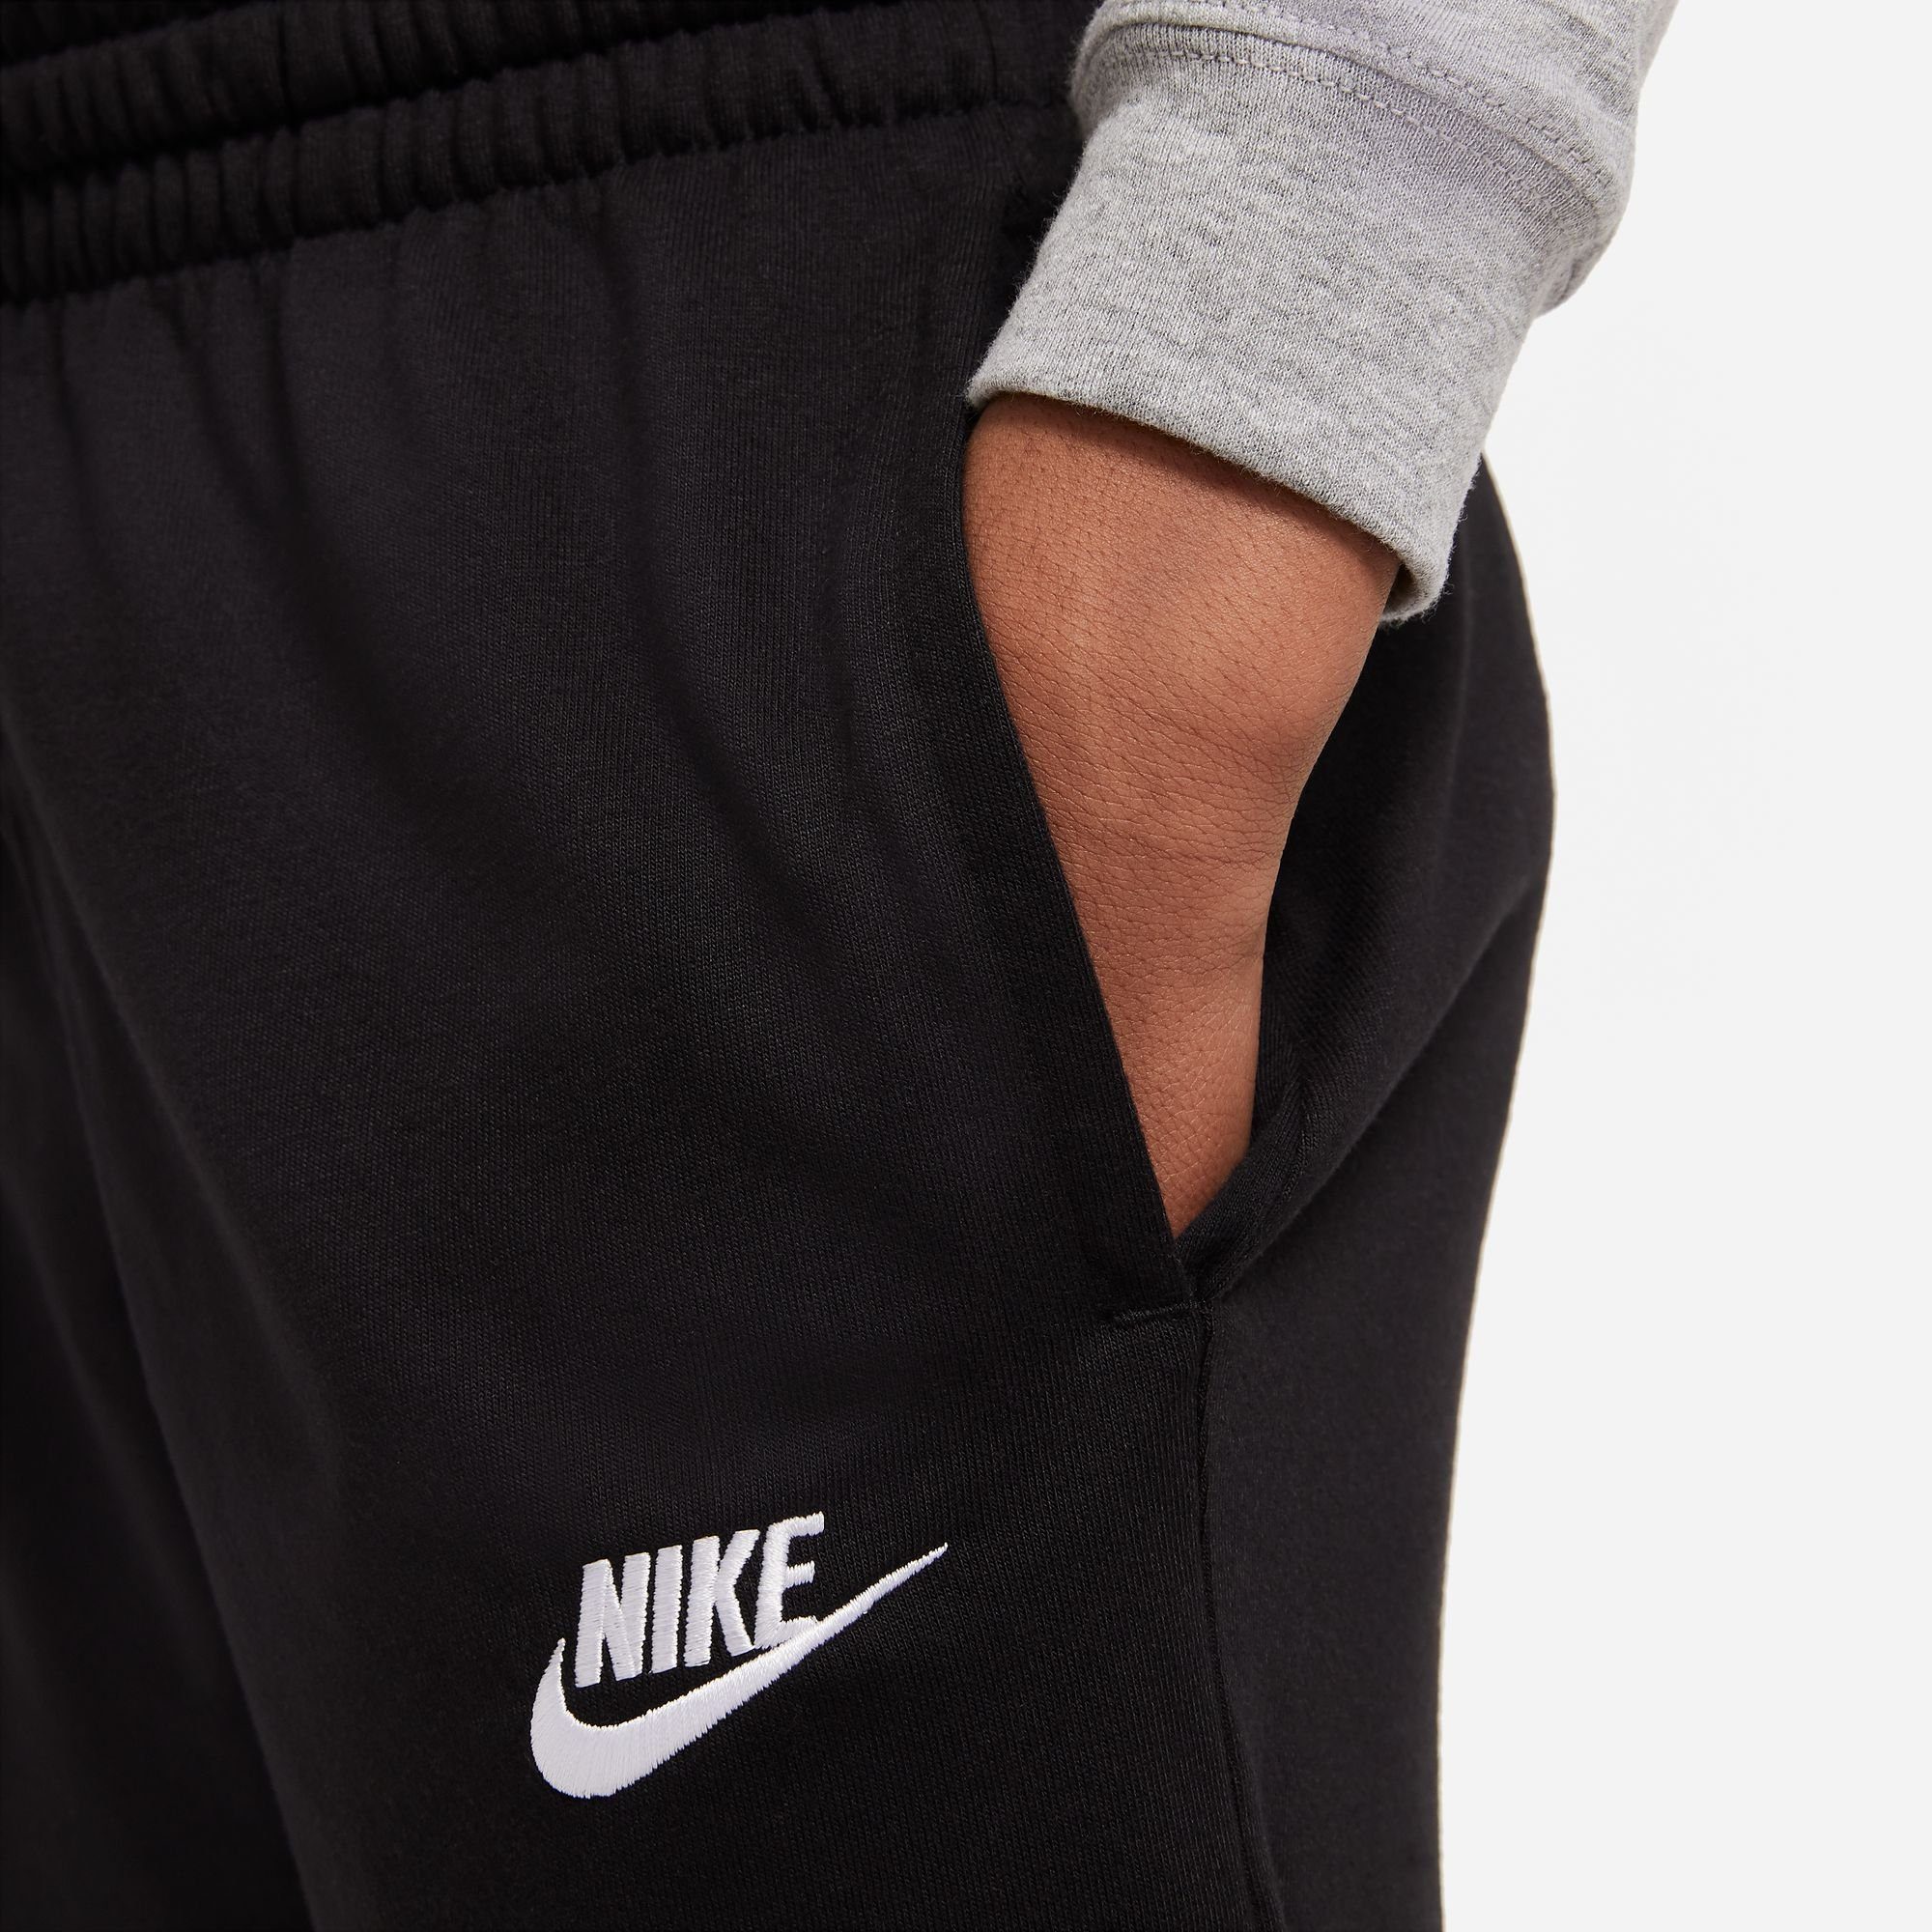 SHORTS BIG (BOYS) KIDS' Nike Shorts Sportswear JERSEY schwarz